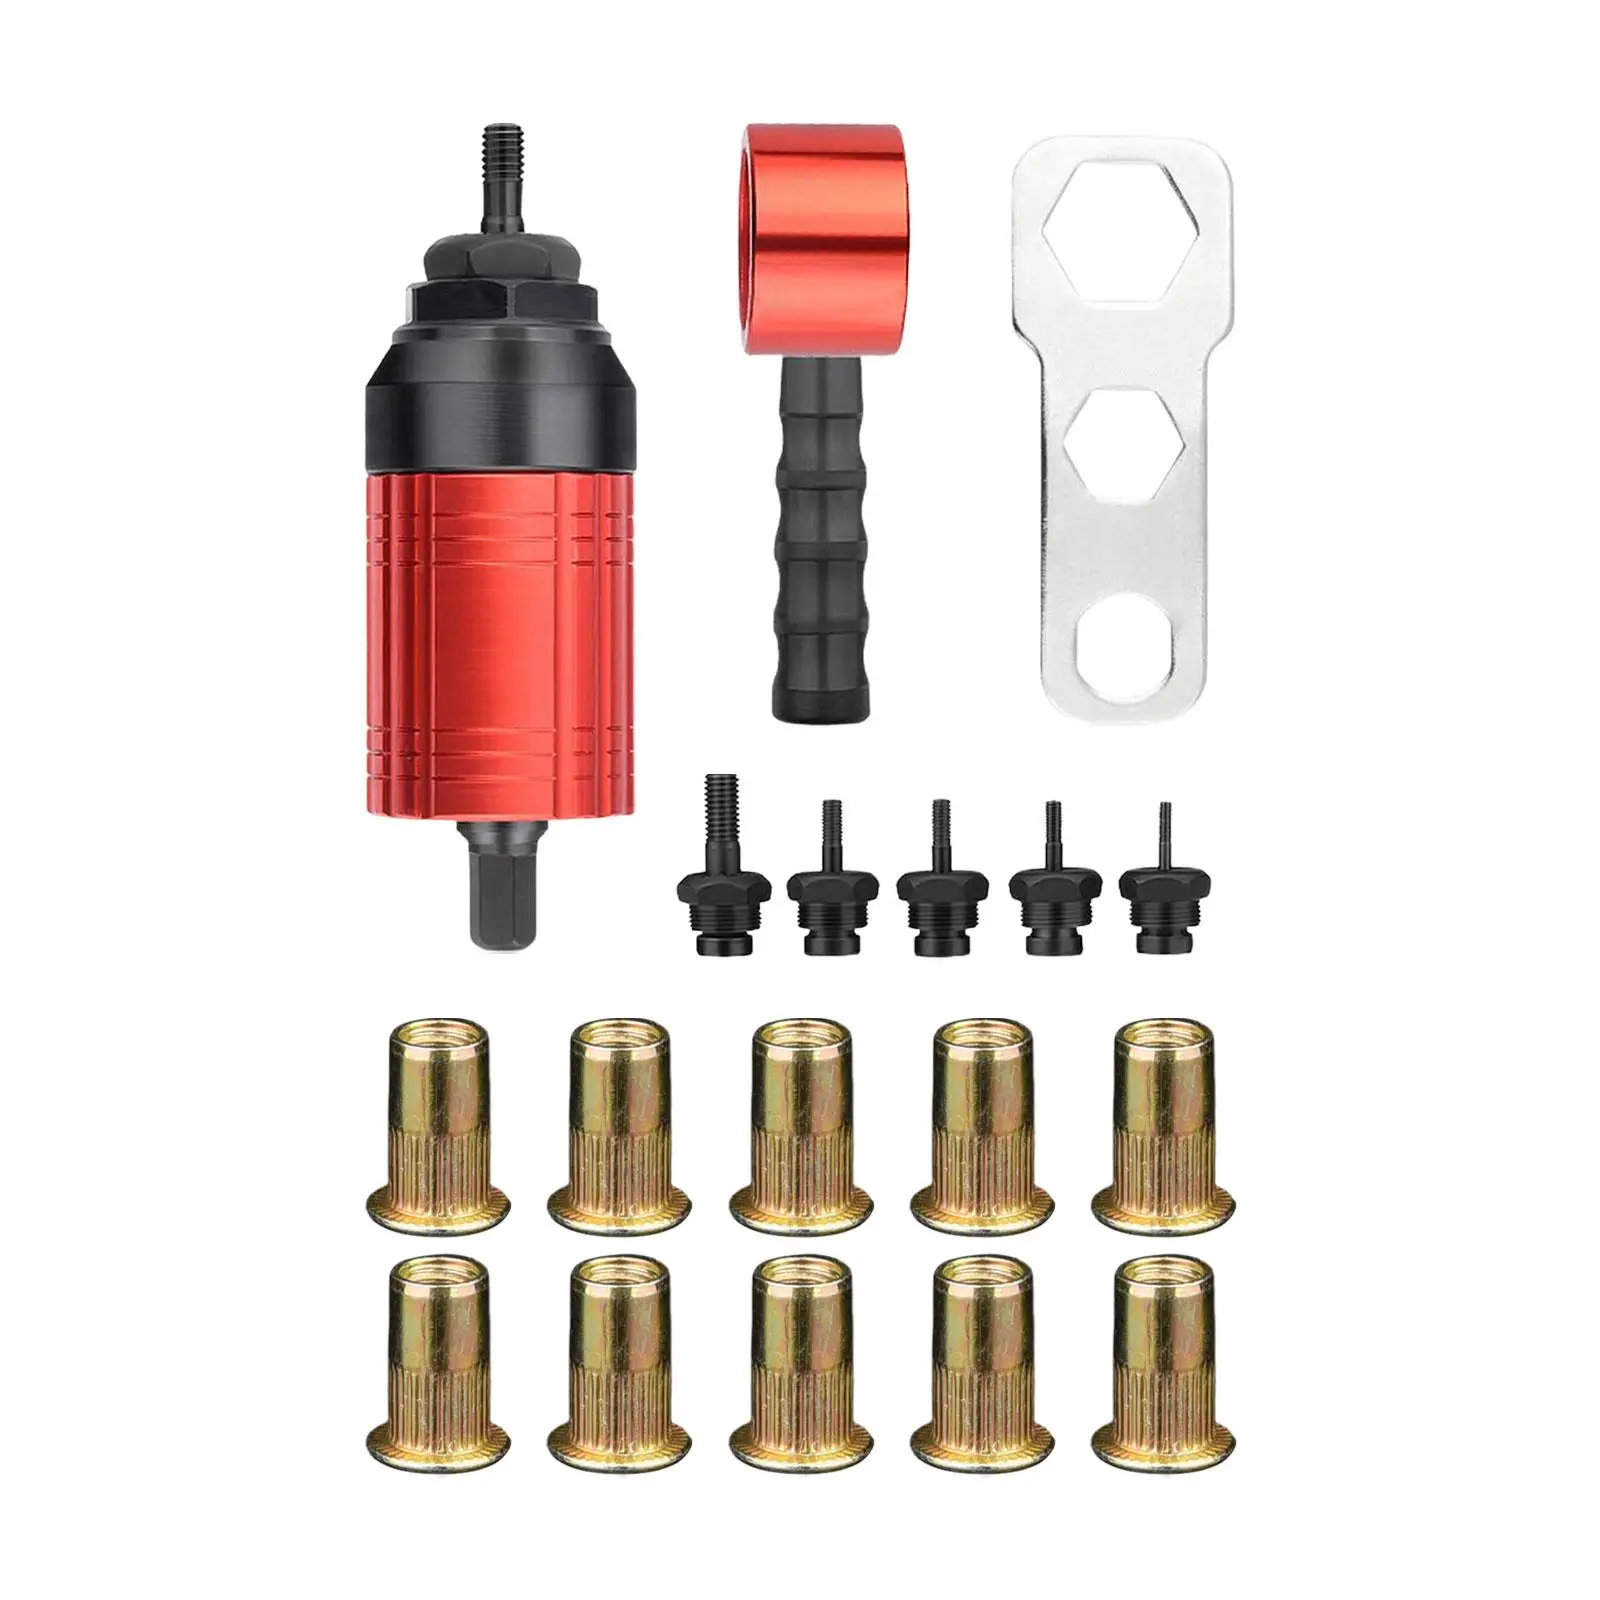 Rivet Nut Drill Adaptor Heavy Duty Threaded Insert Installation Tool Hand Riveter for Electrical Appliance Car Furniture Repair